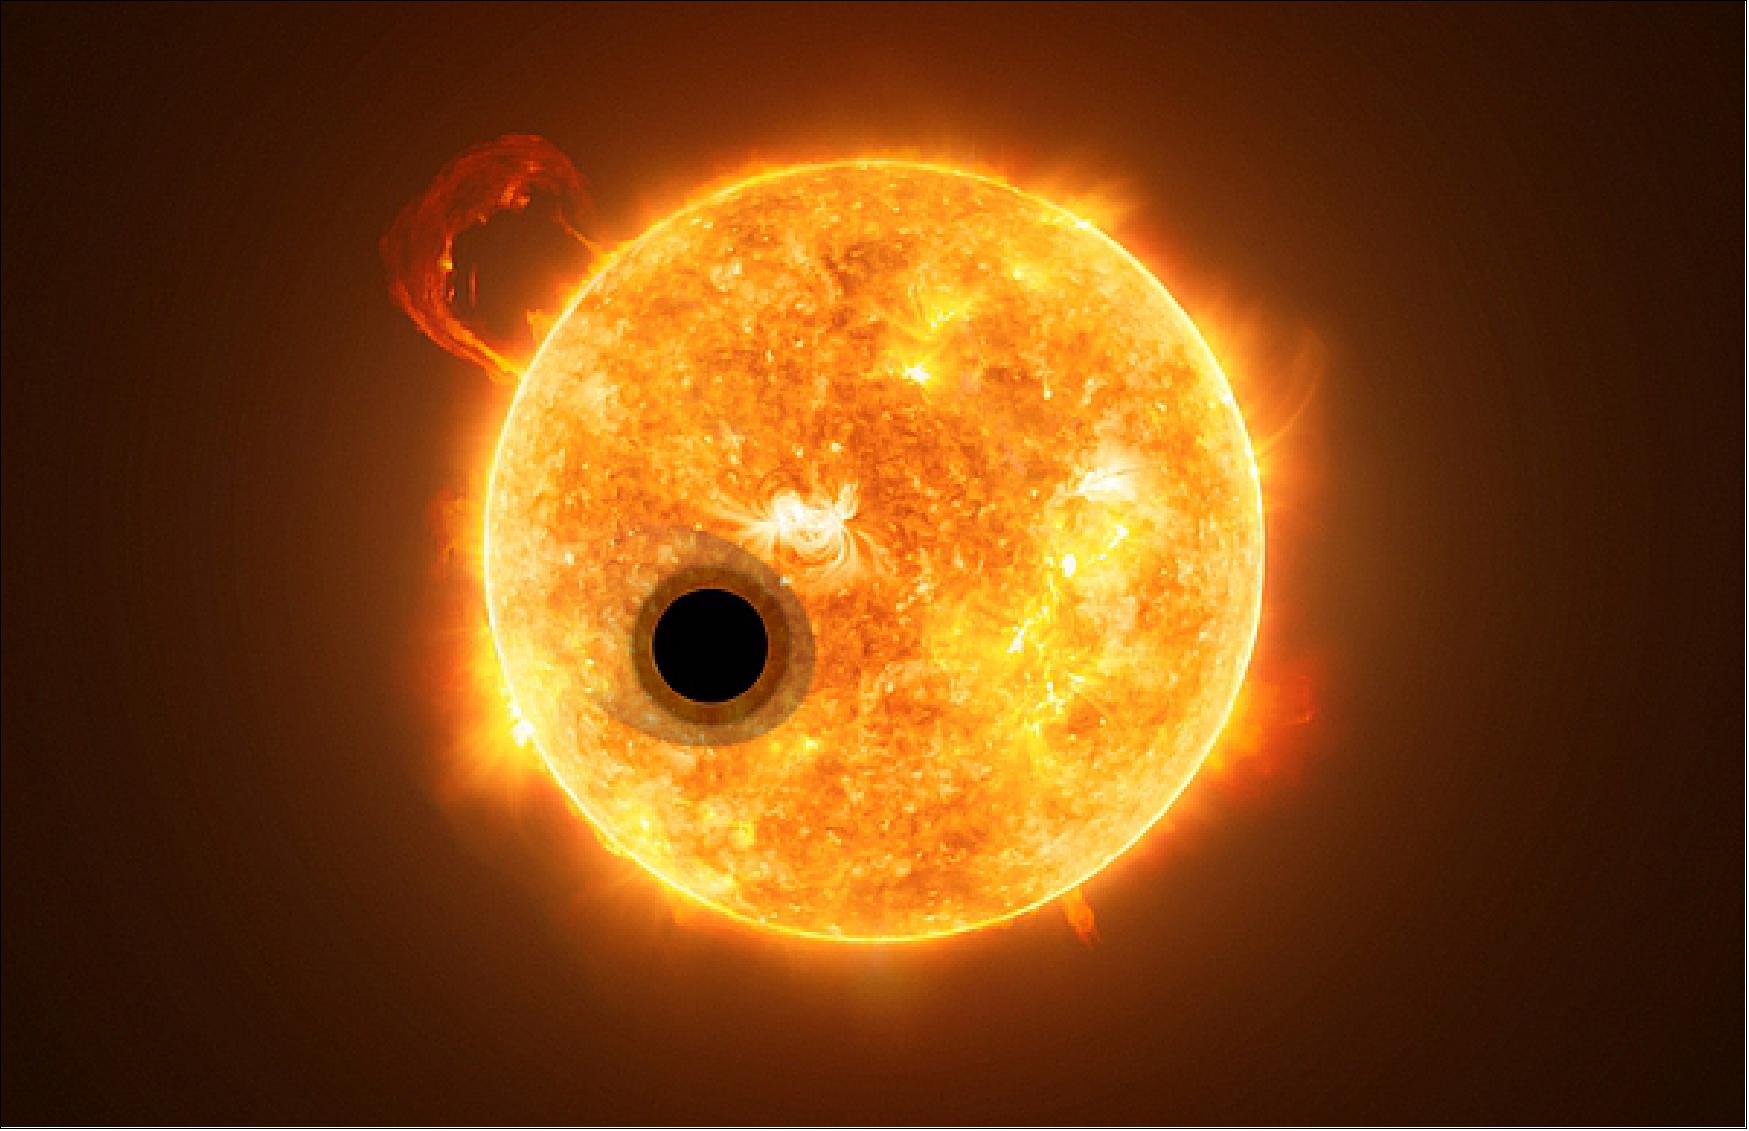 Figure 39: Artist's impression of WASP-107b (image credit: ESA/Hubble, NASA, M. Kornmesser, CC BY 4.0)